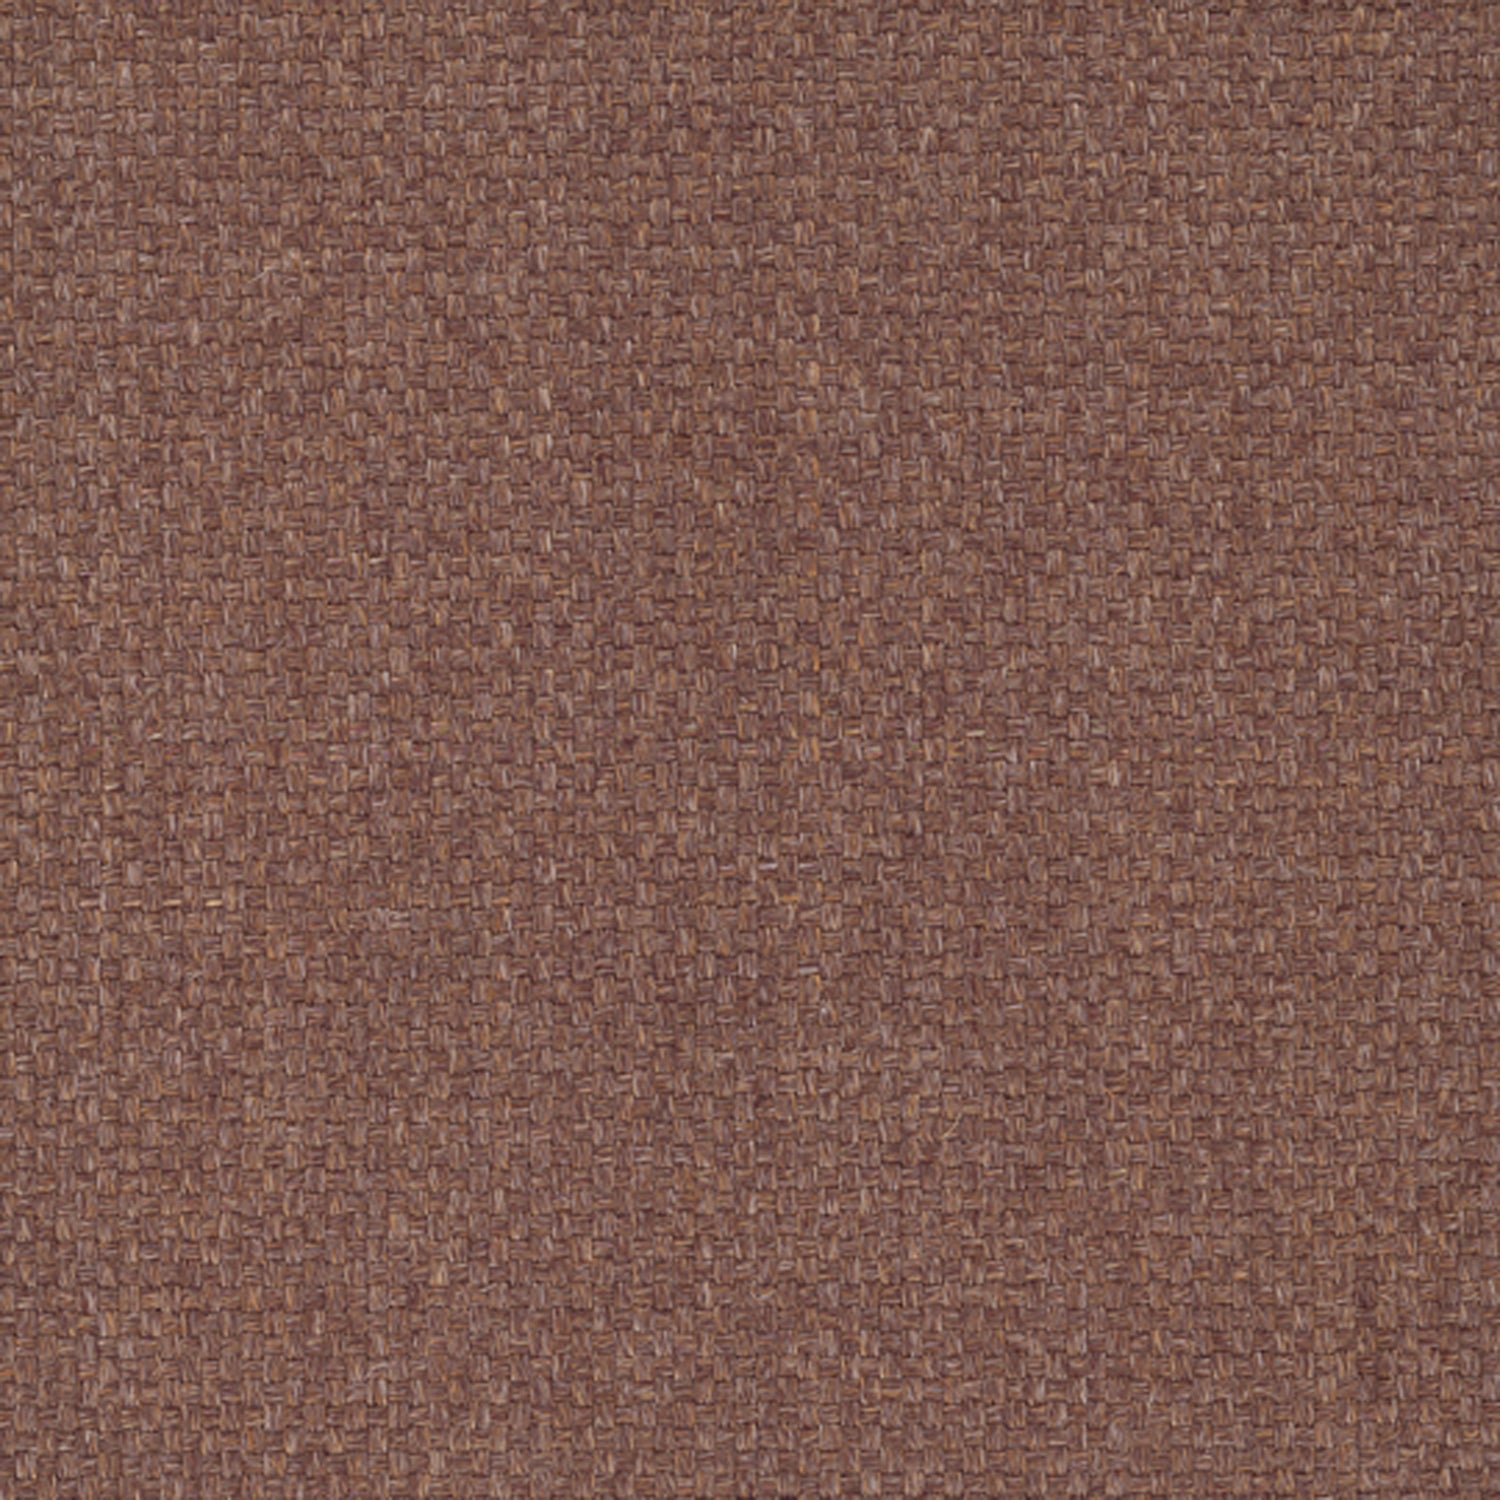 Sisal broadloom carpet swatch in a chunky grid weave in sable.